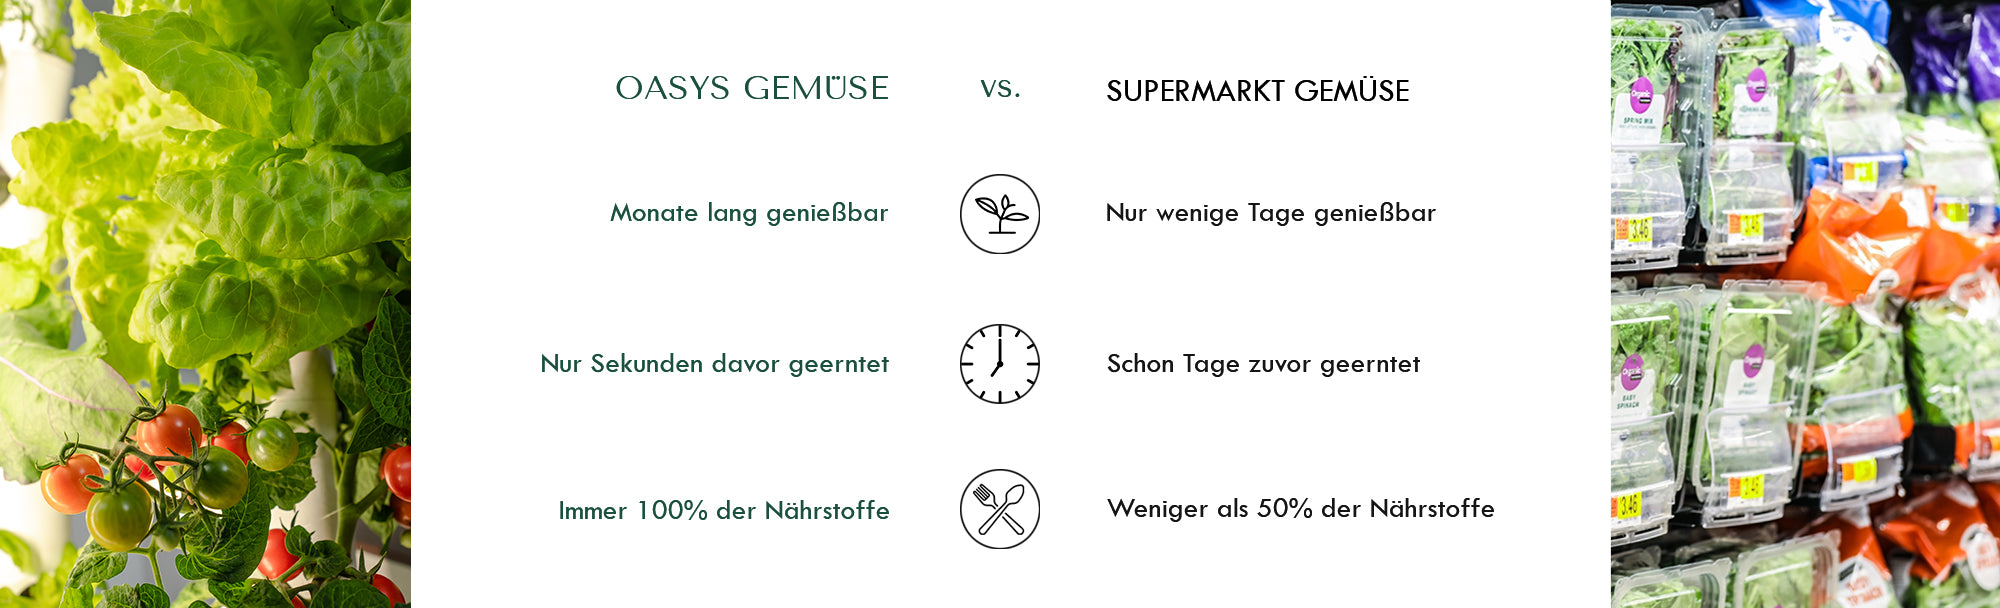 Vergleich OASYS vs Supermarkt